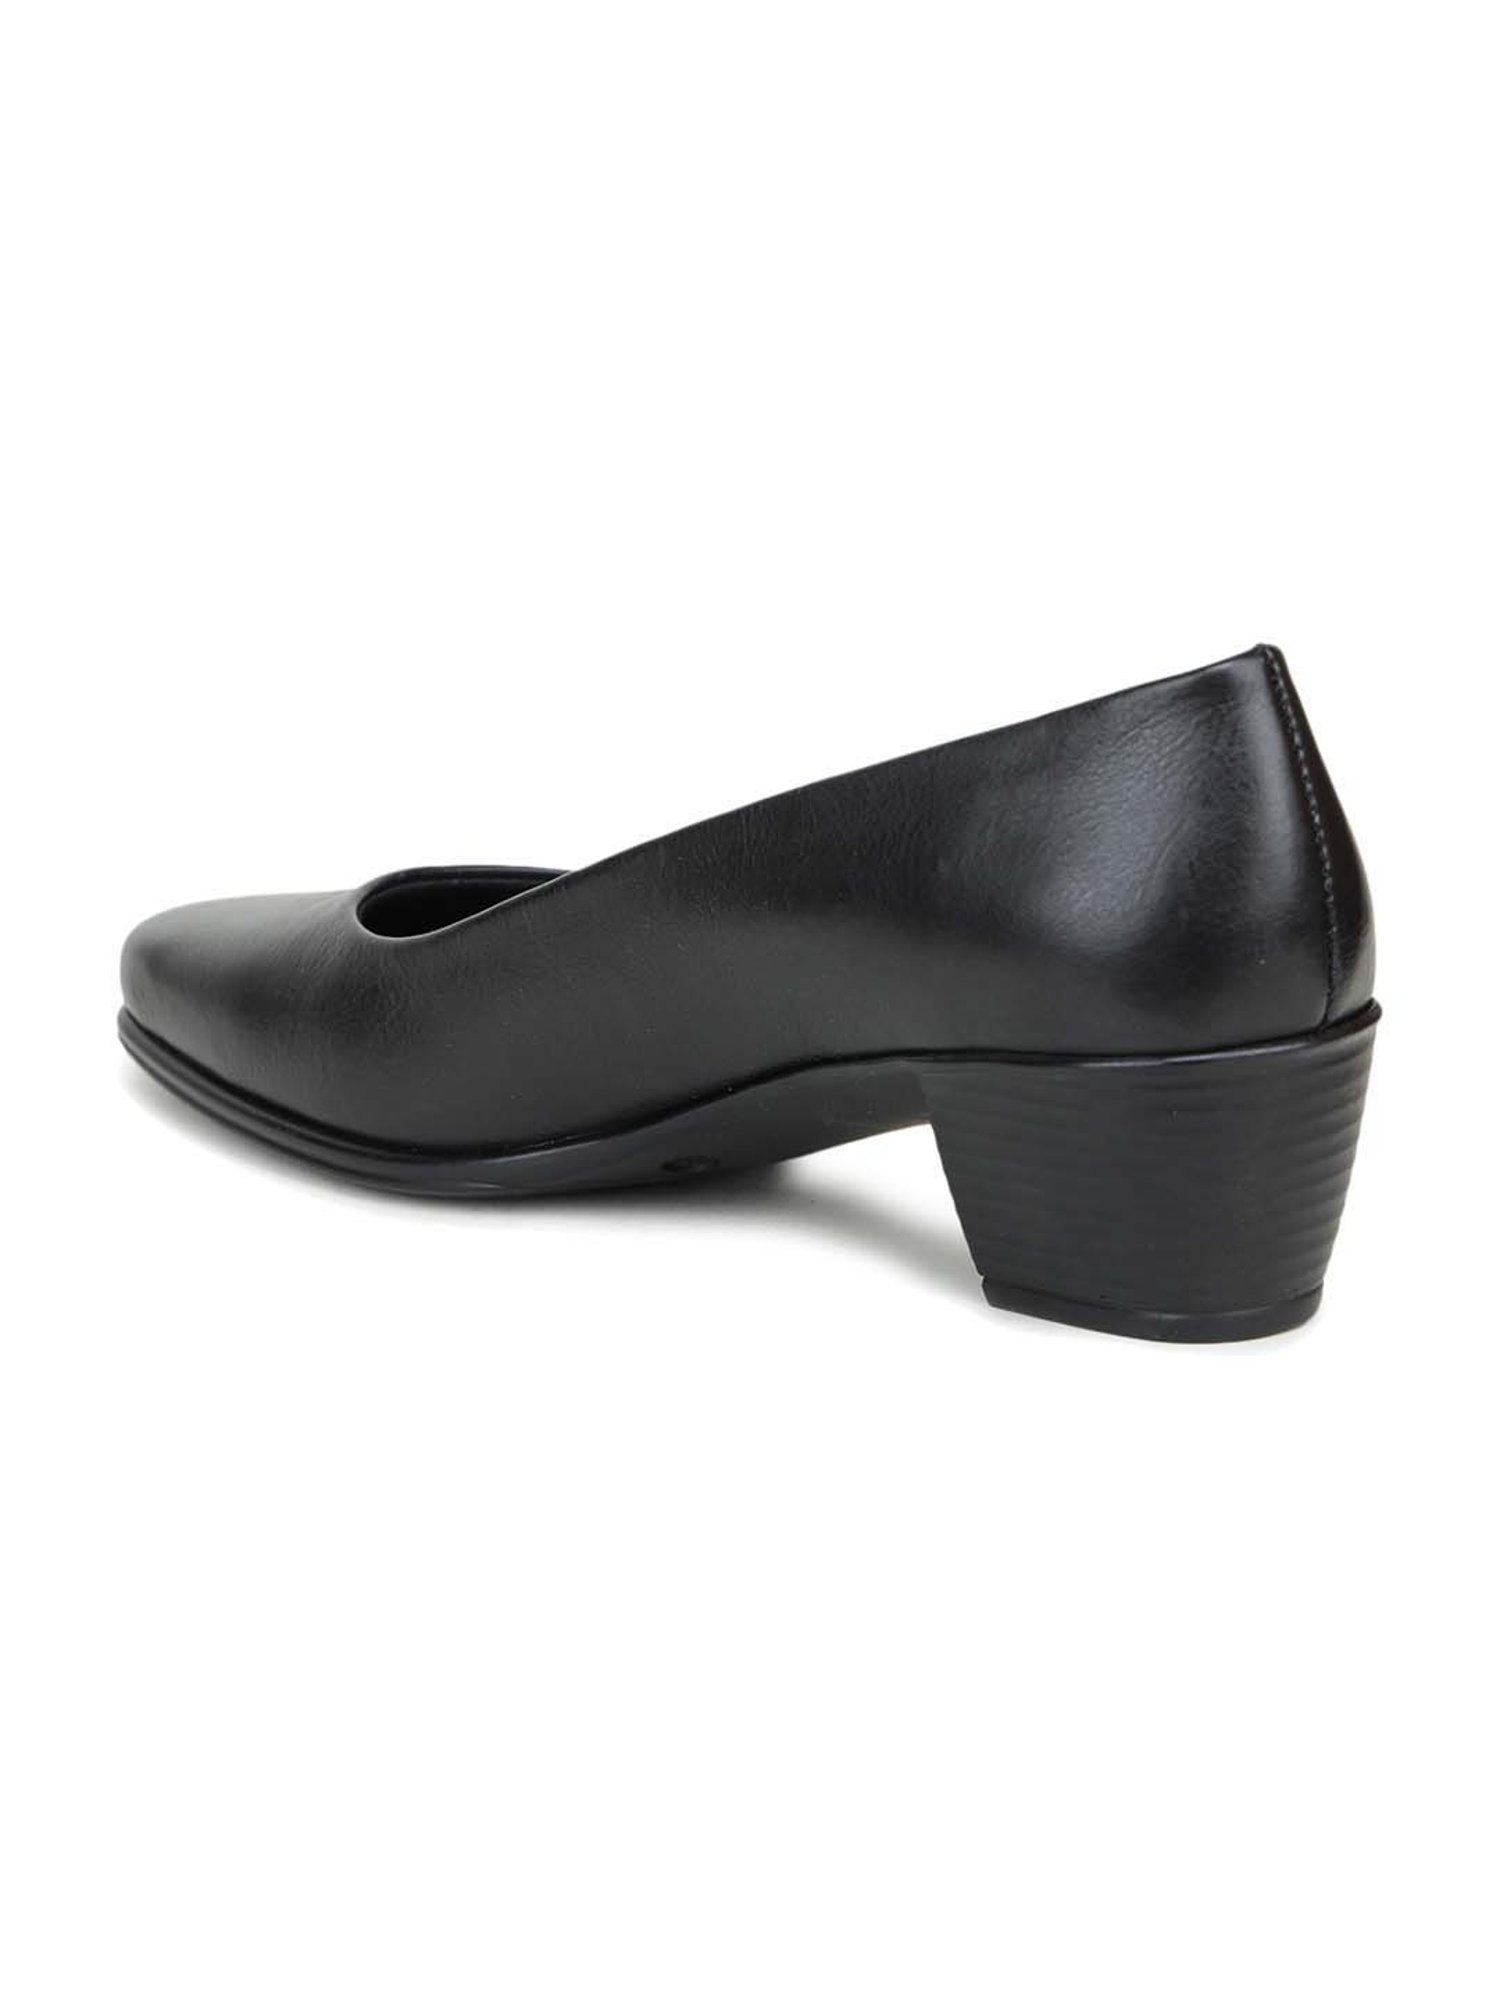 Black White Lace Up Vintage High Heels Oxfords Dress Shoes